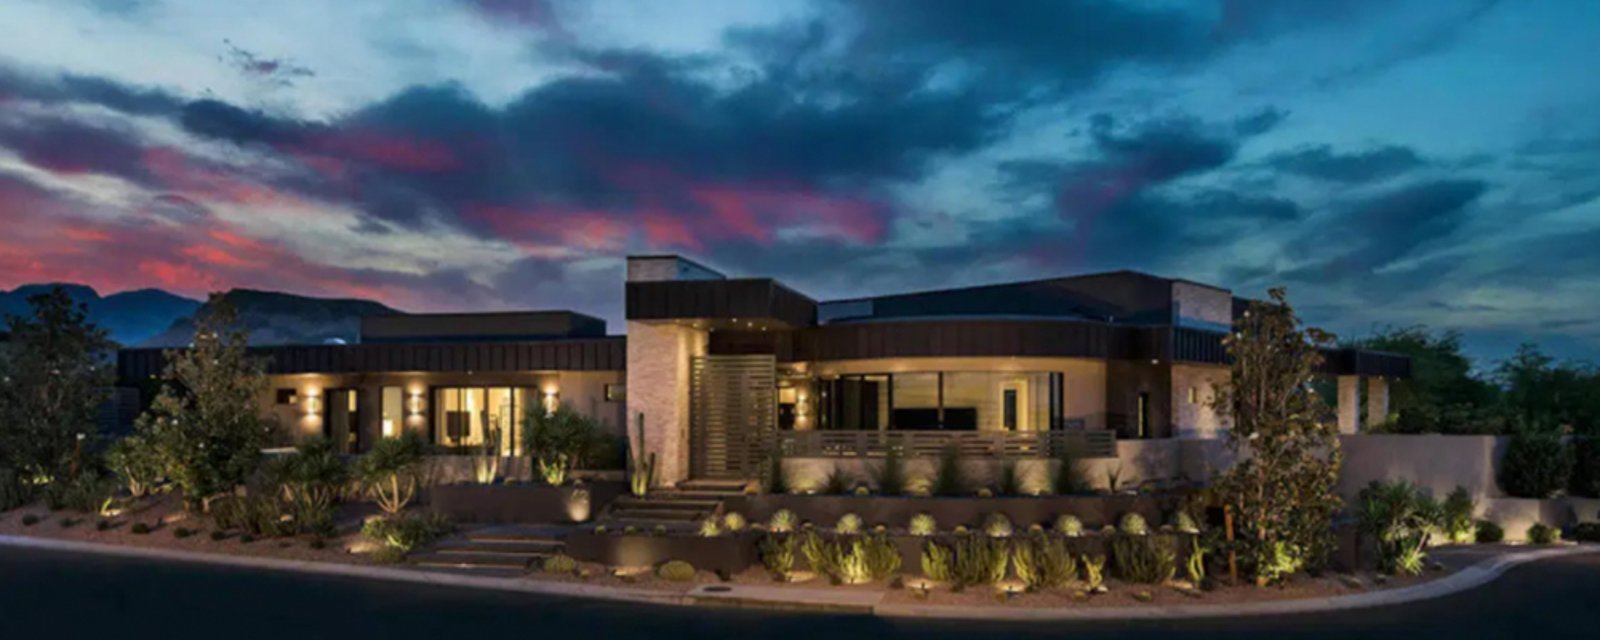 Pietrangelo buys crazy $6 million mansion in Vegas!